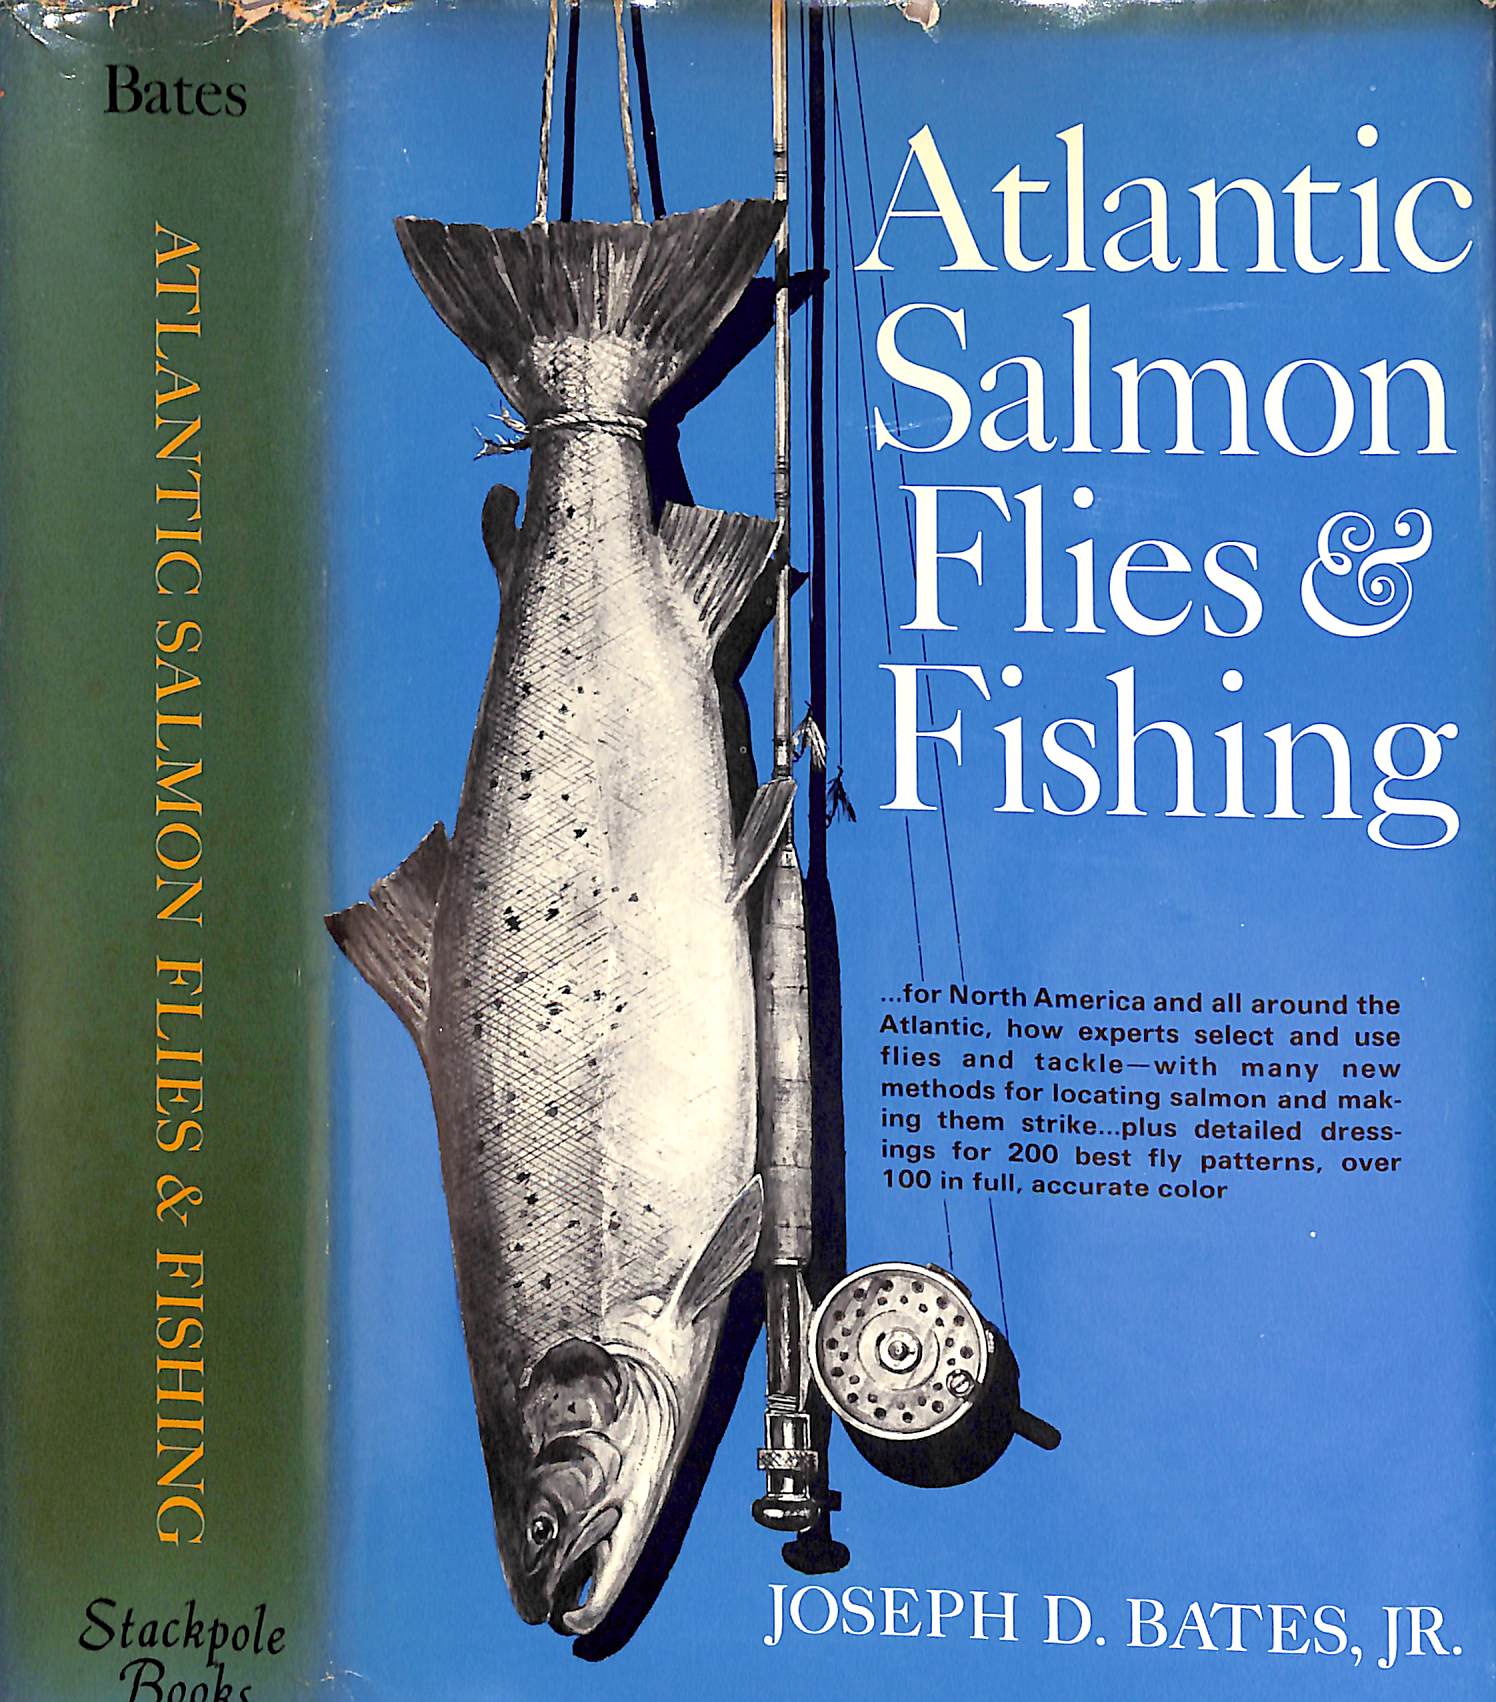 Atlantic Salmon Flies And Fishing 1970 BATES, Joseph D Jr.